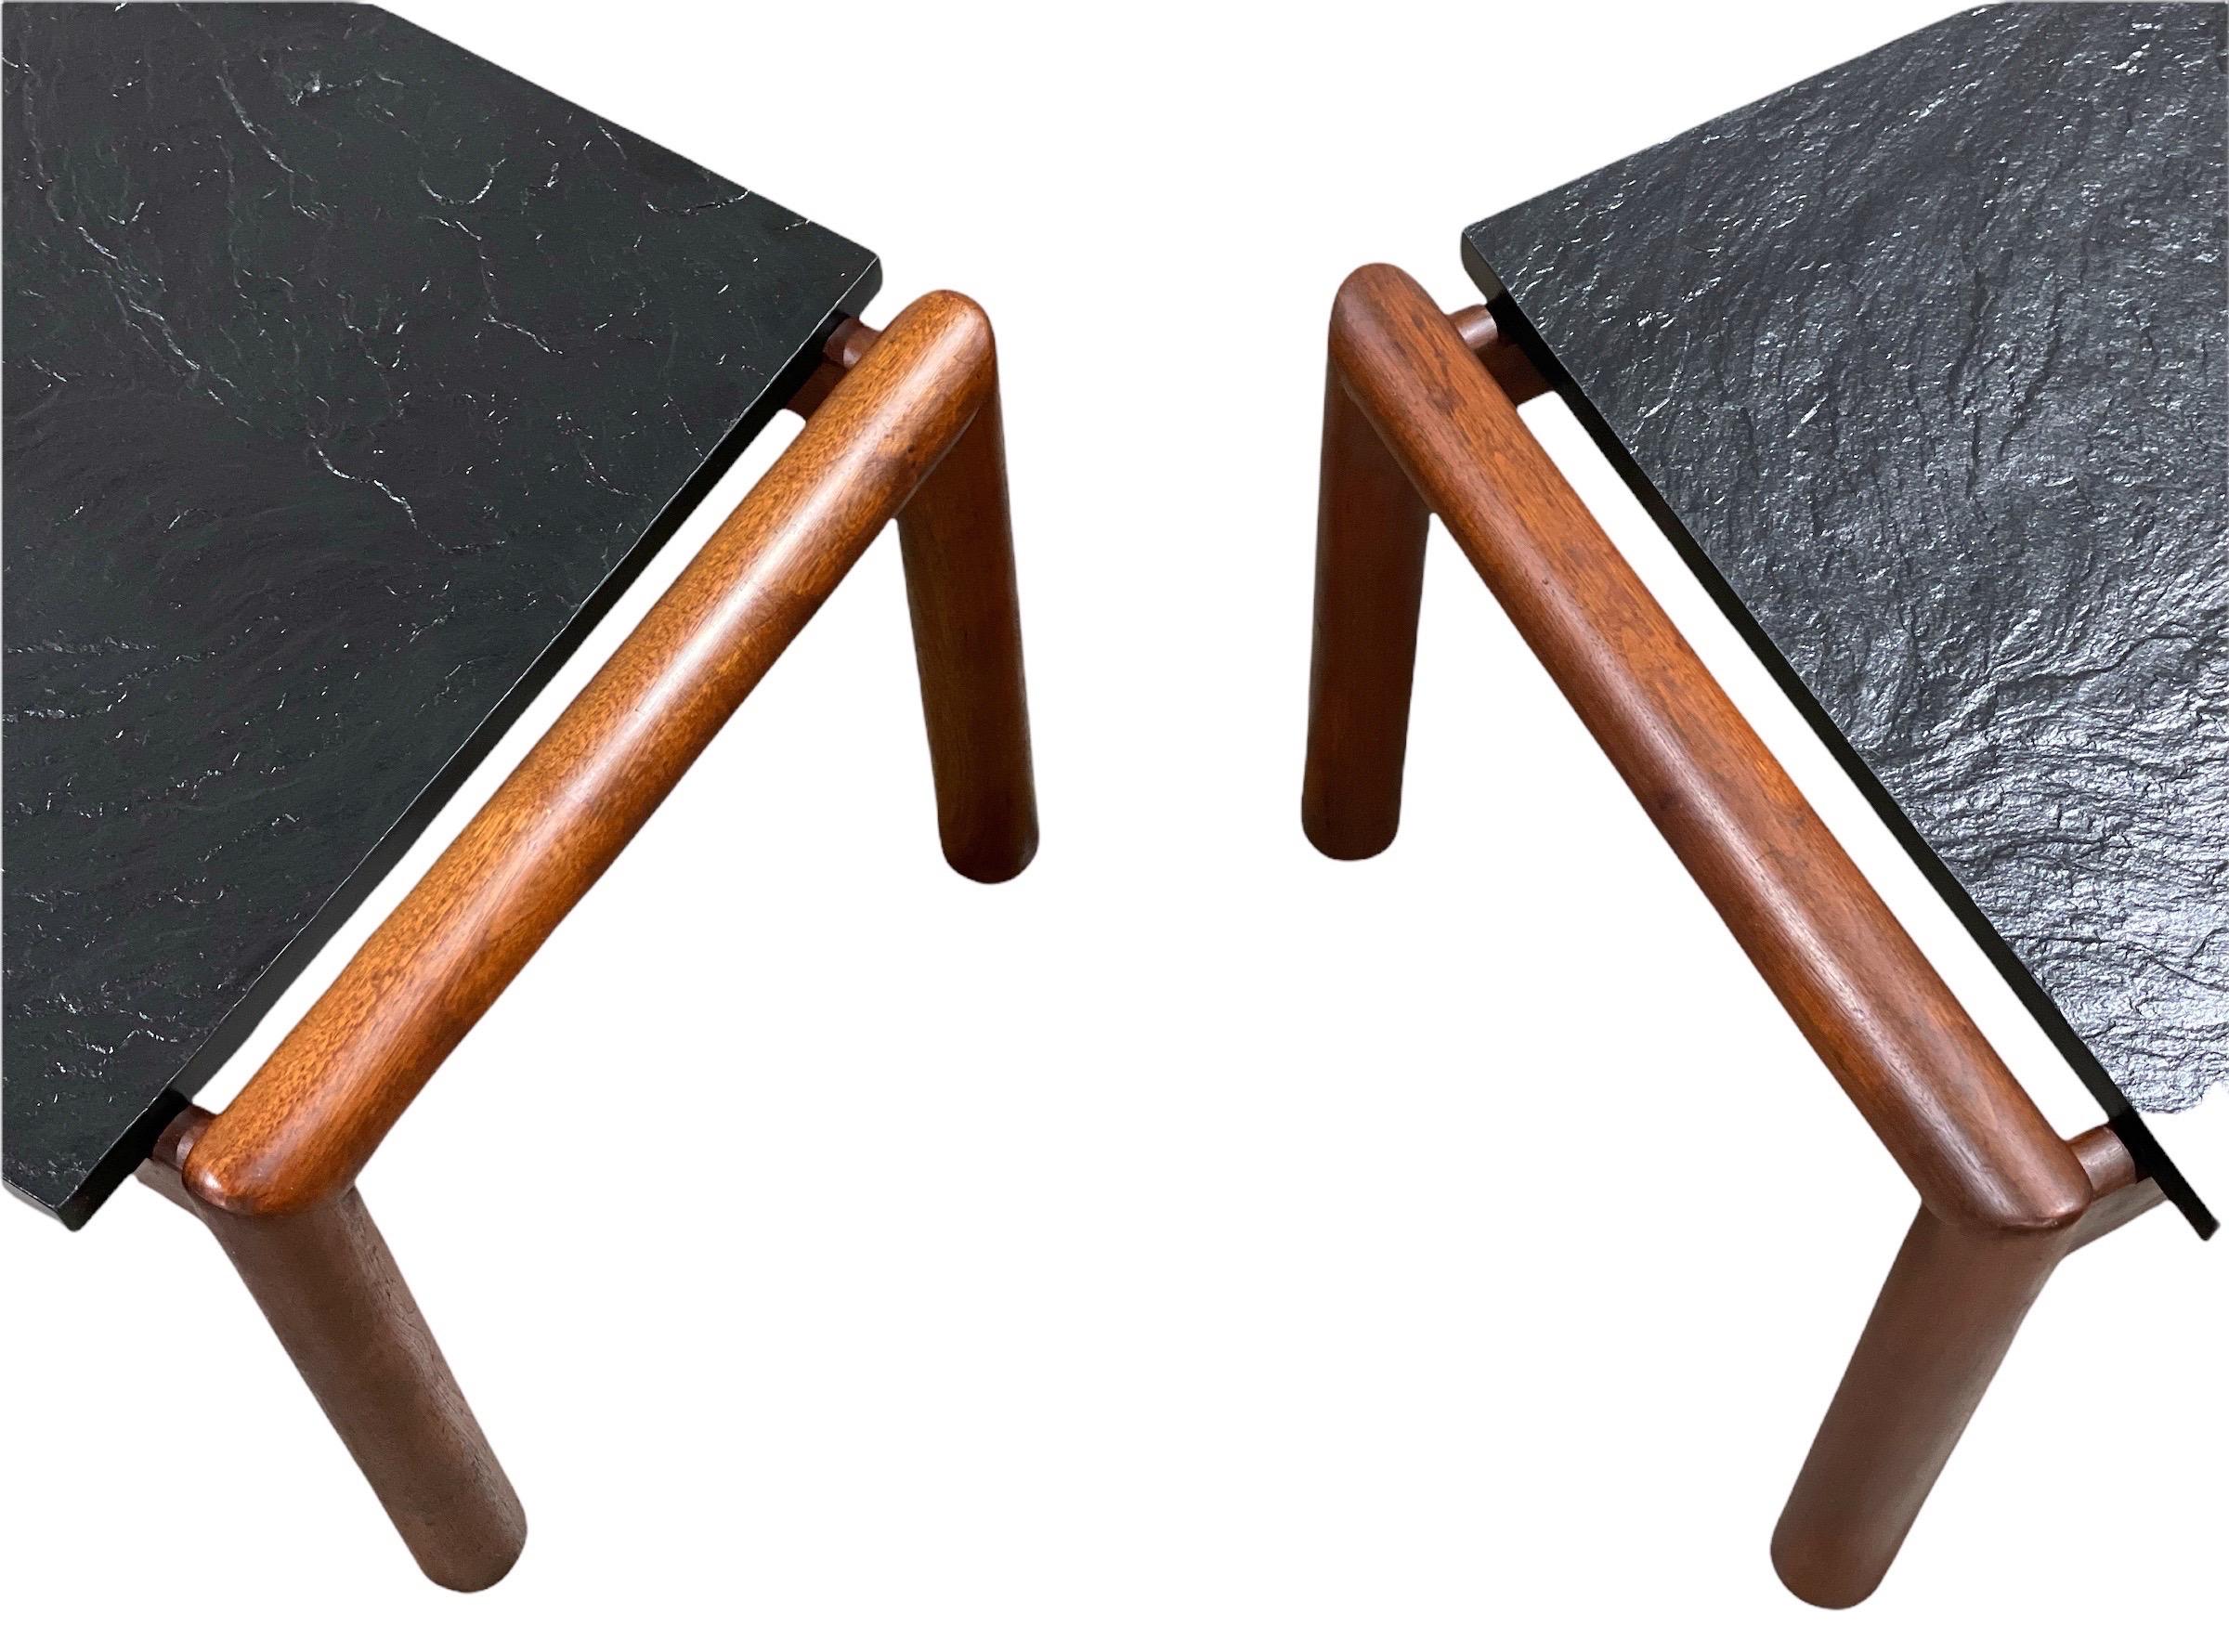 Mid-Century Modern Adrian Pearsall Midcentury Organic Modern Side Tables - Walnut + Slate - a Pair